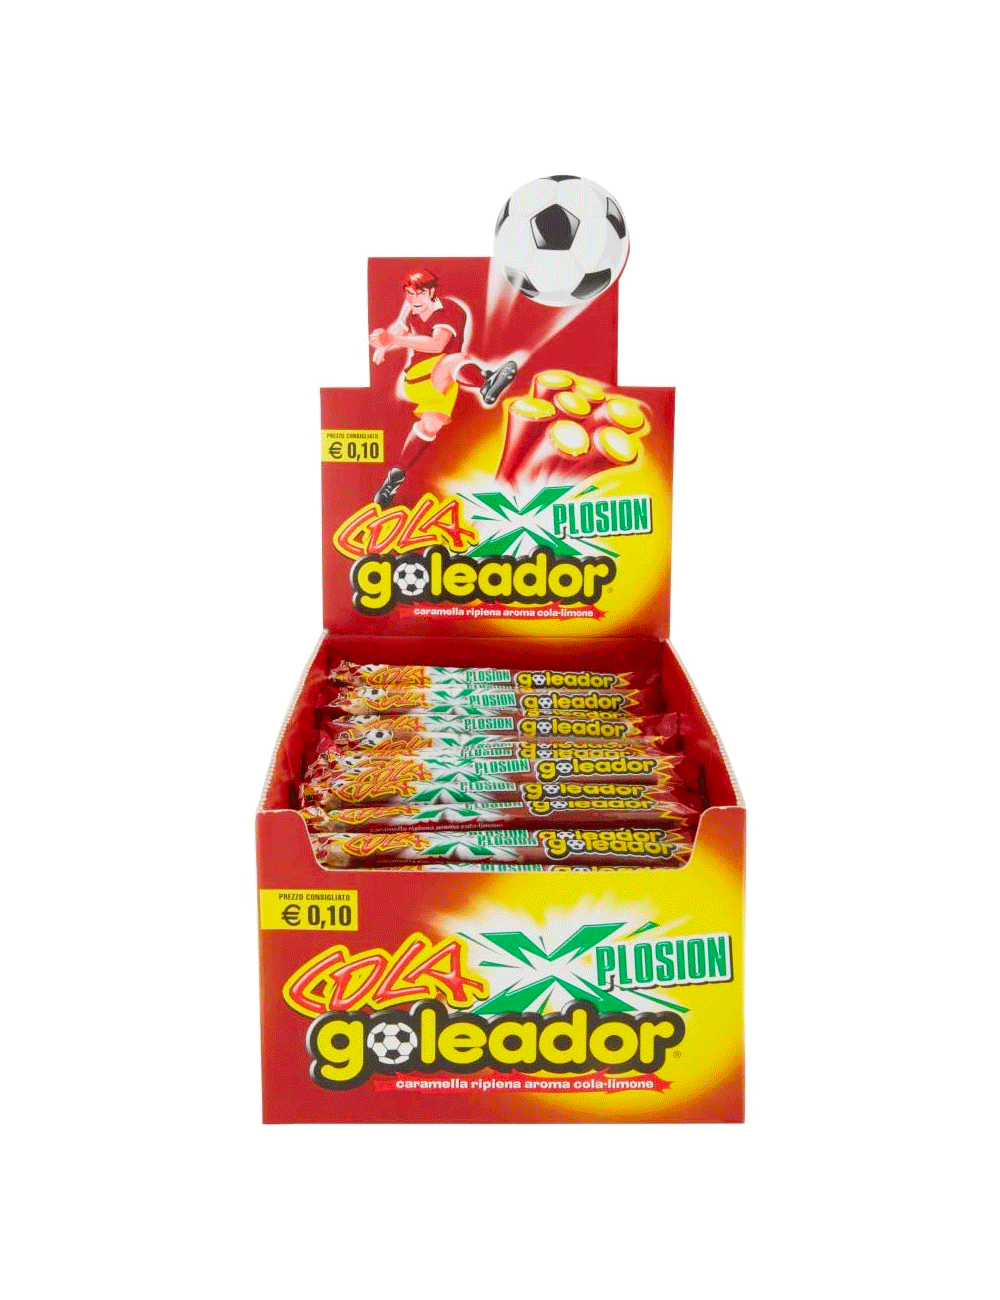 https://gecoshop.com/6057/goleador-cola-xplosion-caramelle-gommose-150-pezzi-x-10-g.jpg